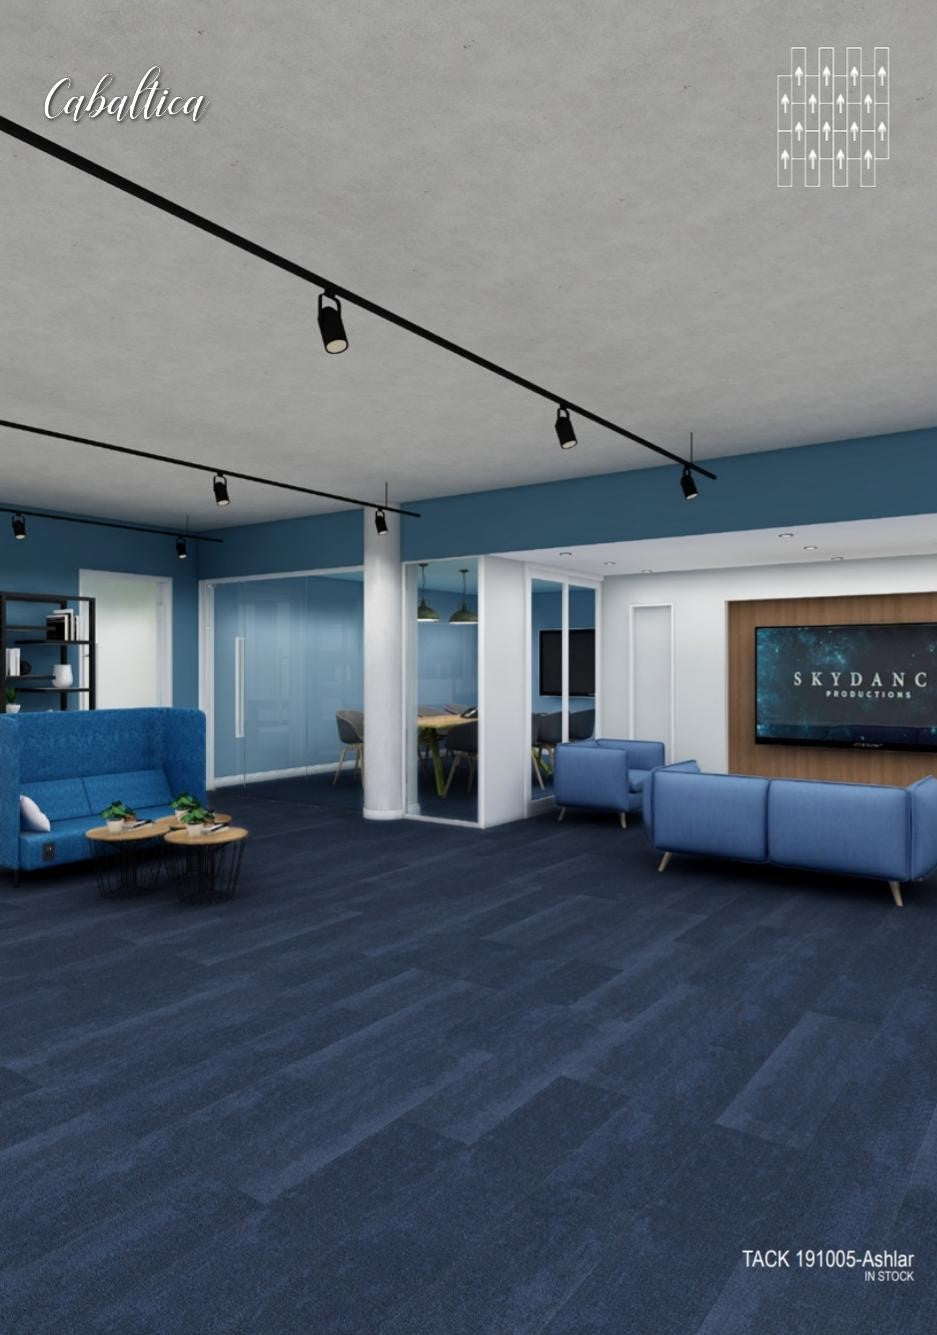 Cabaltica Commercial Carpet Tiles Model: CBTC-TACK191005, Color Dark Blue